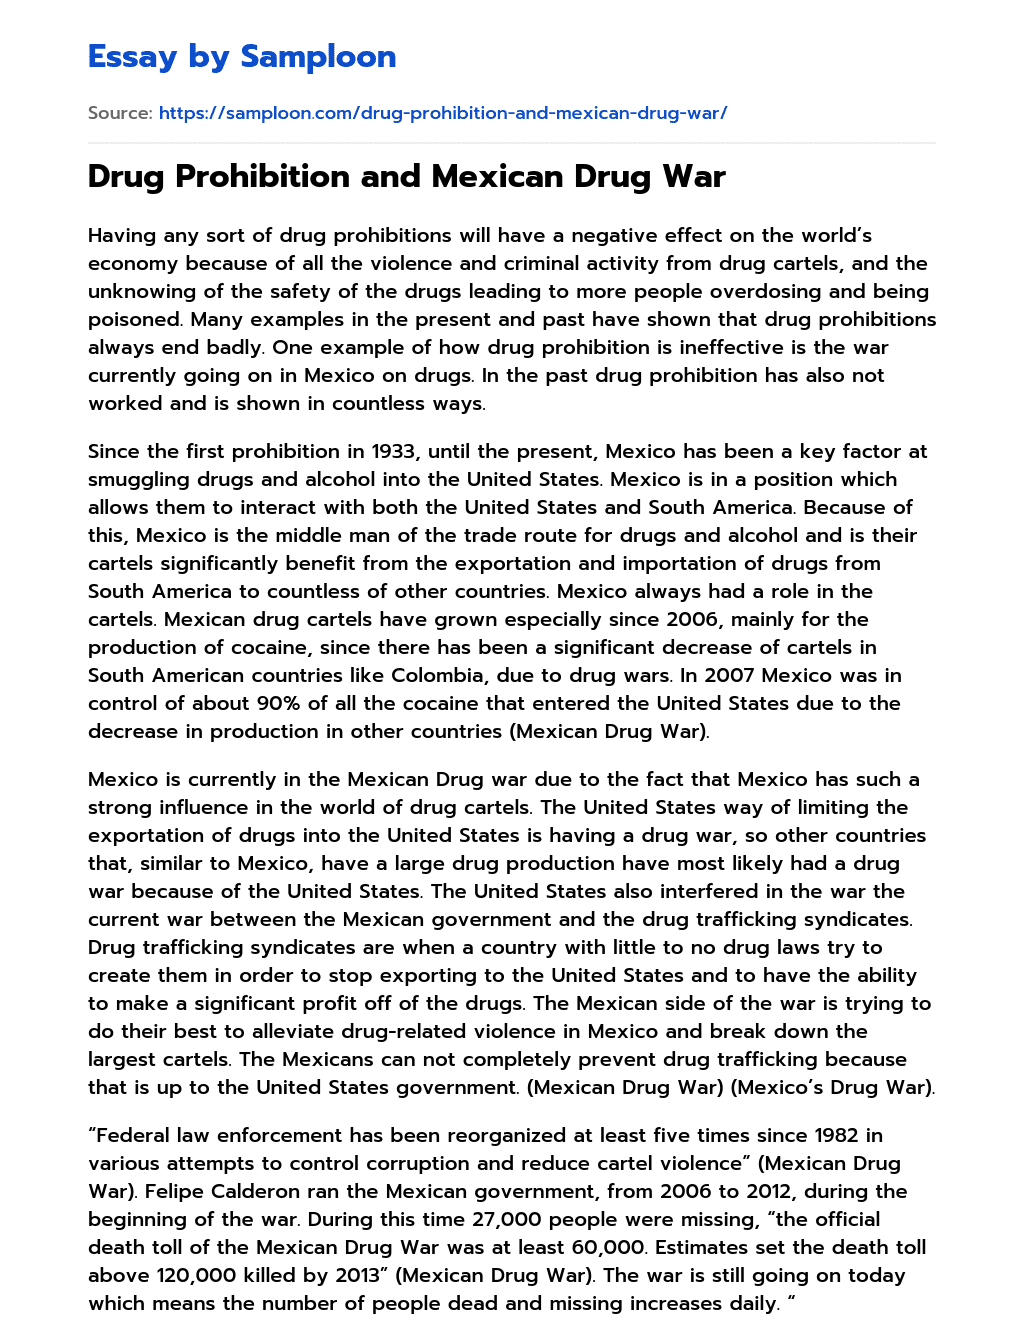 Drug Prohibition and Mexican Drug War essay